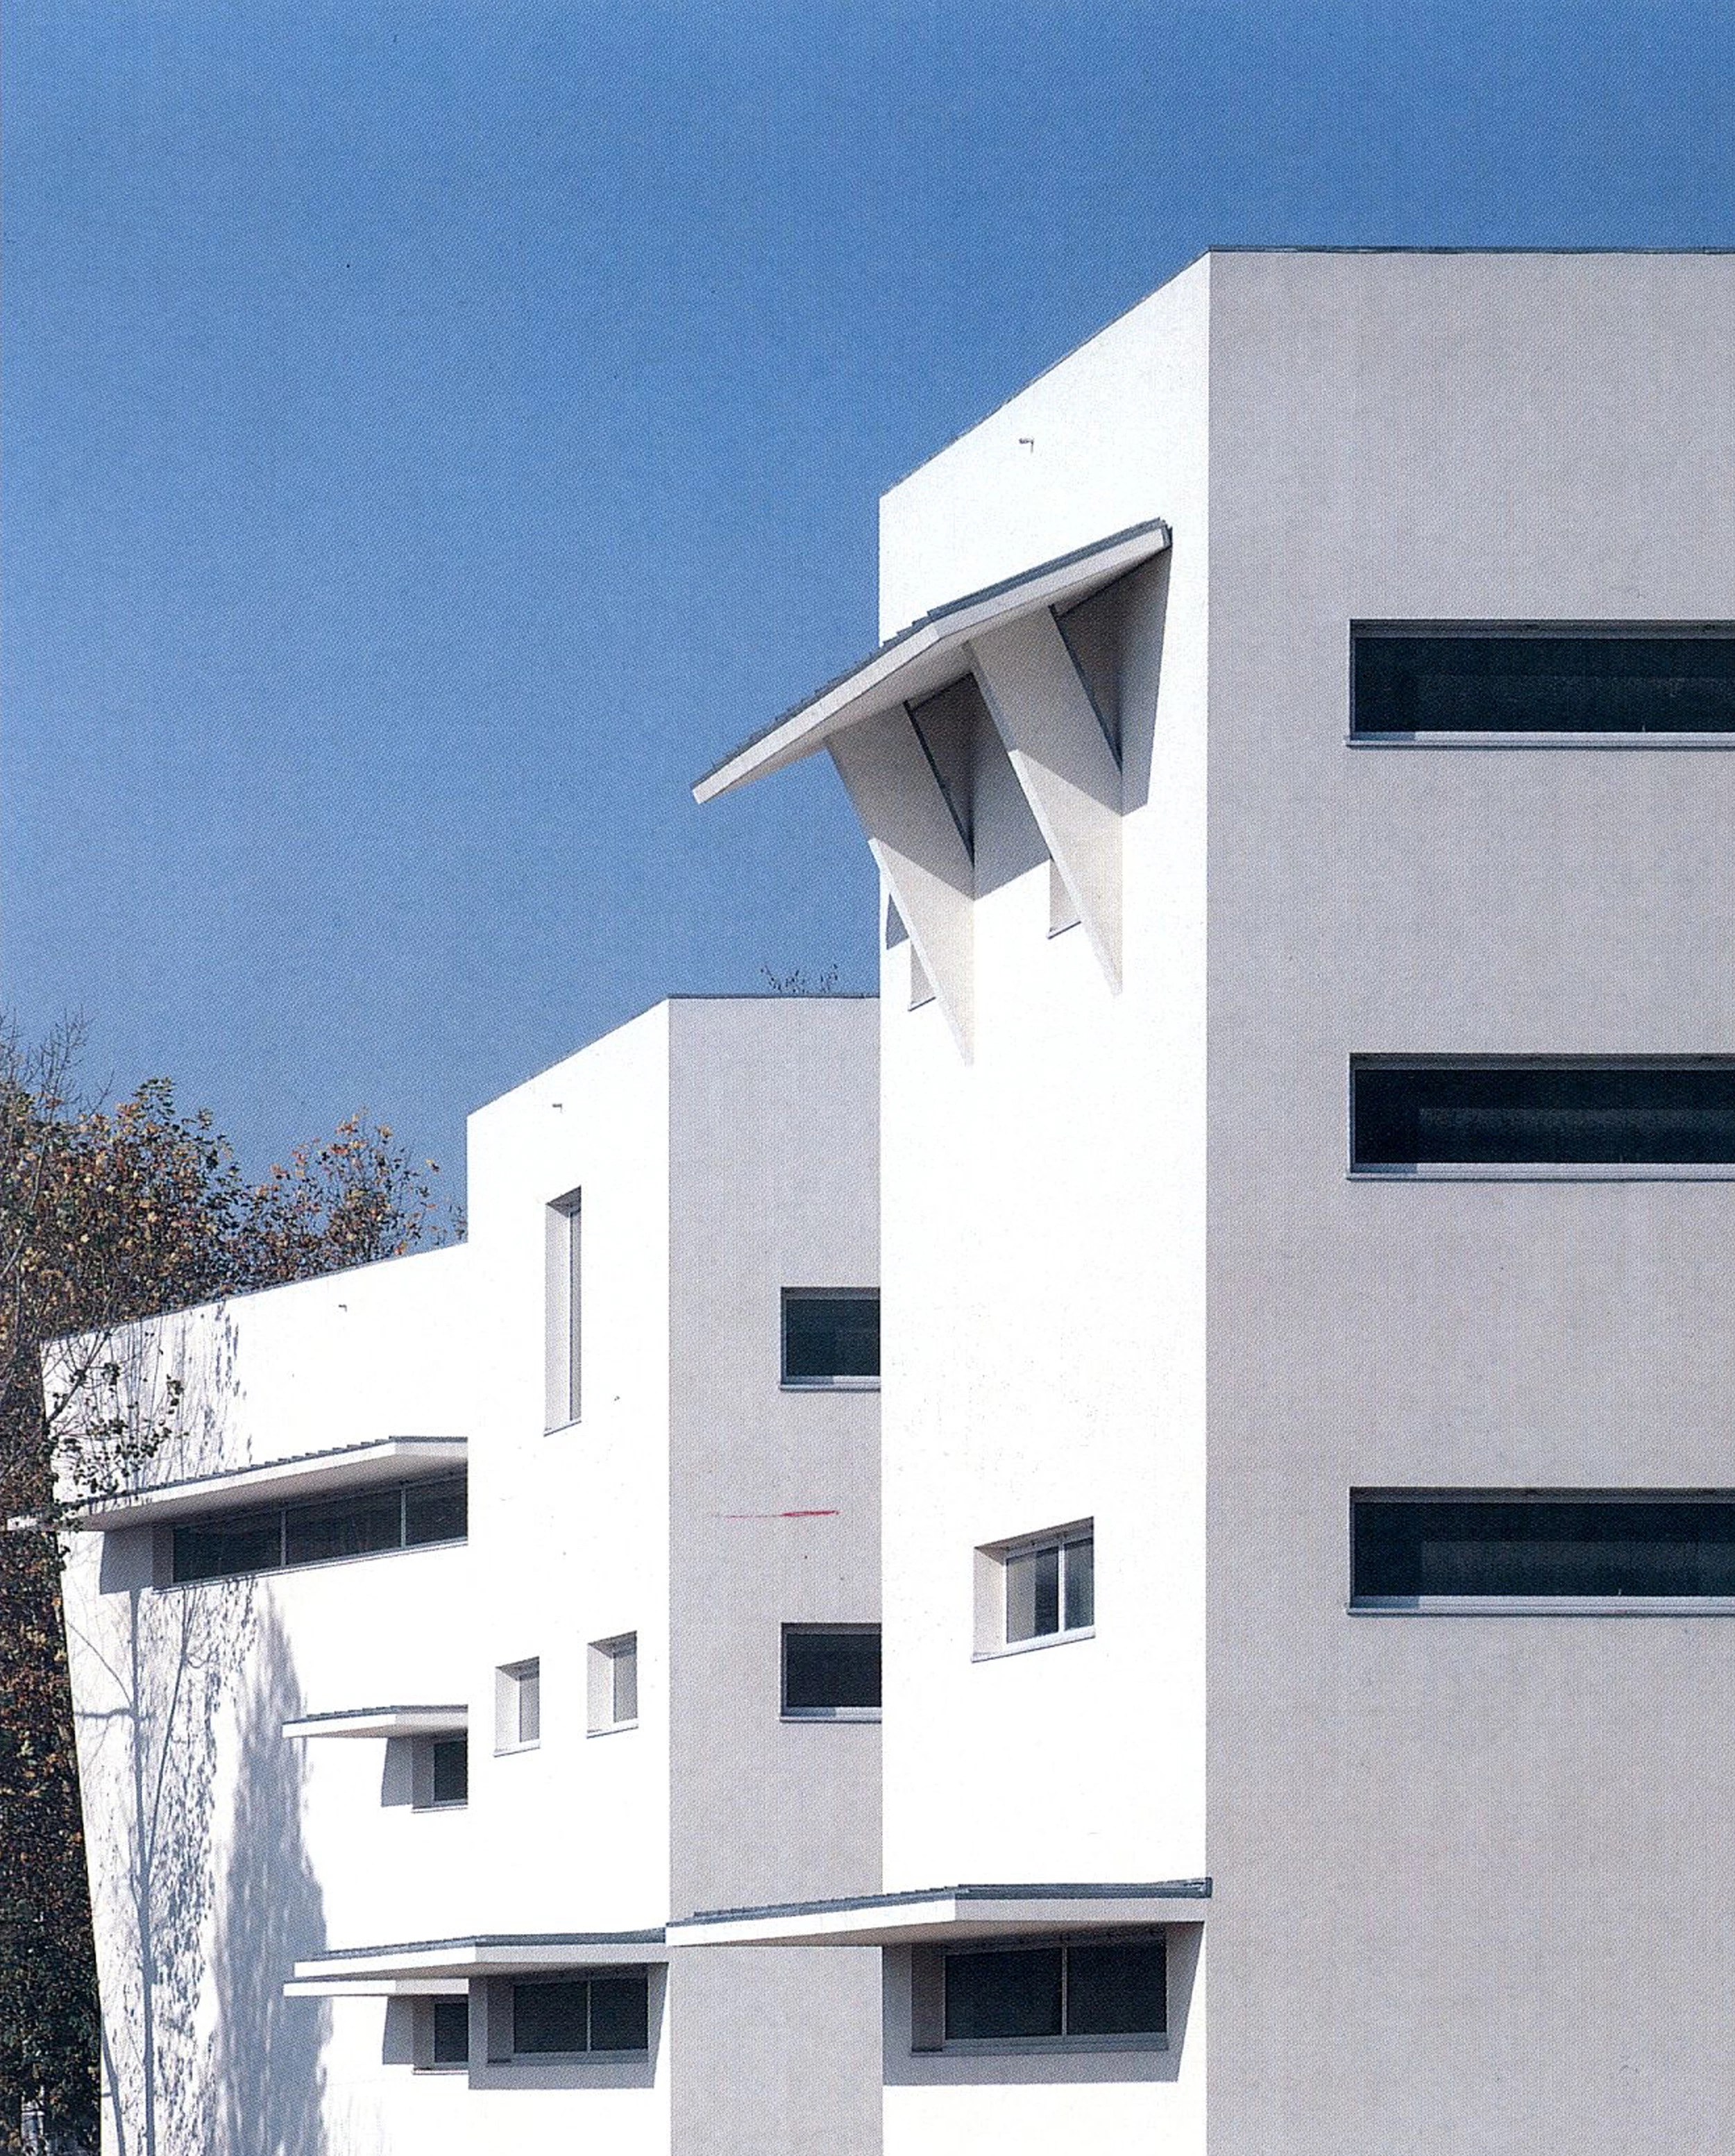 Faculty of Architecture, Porto